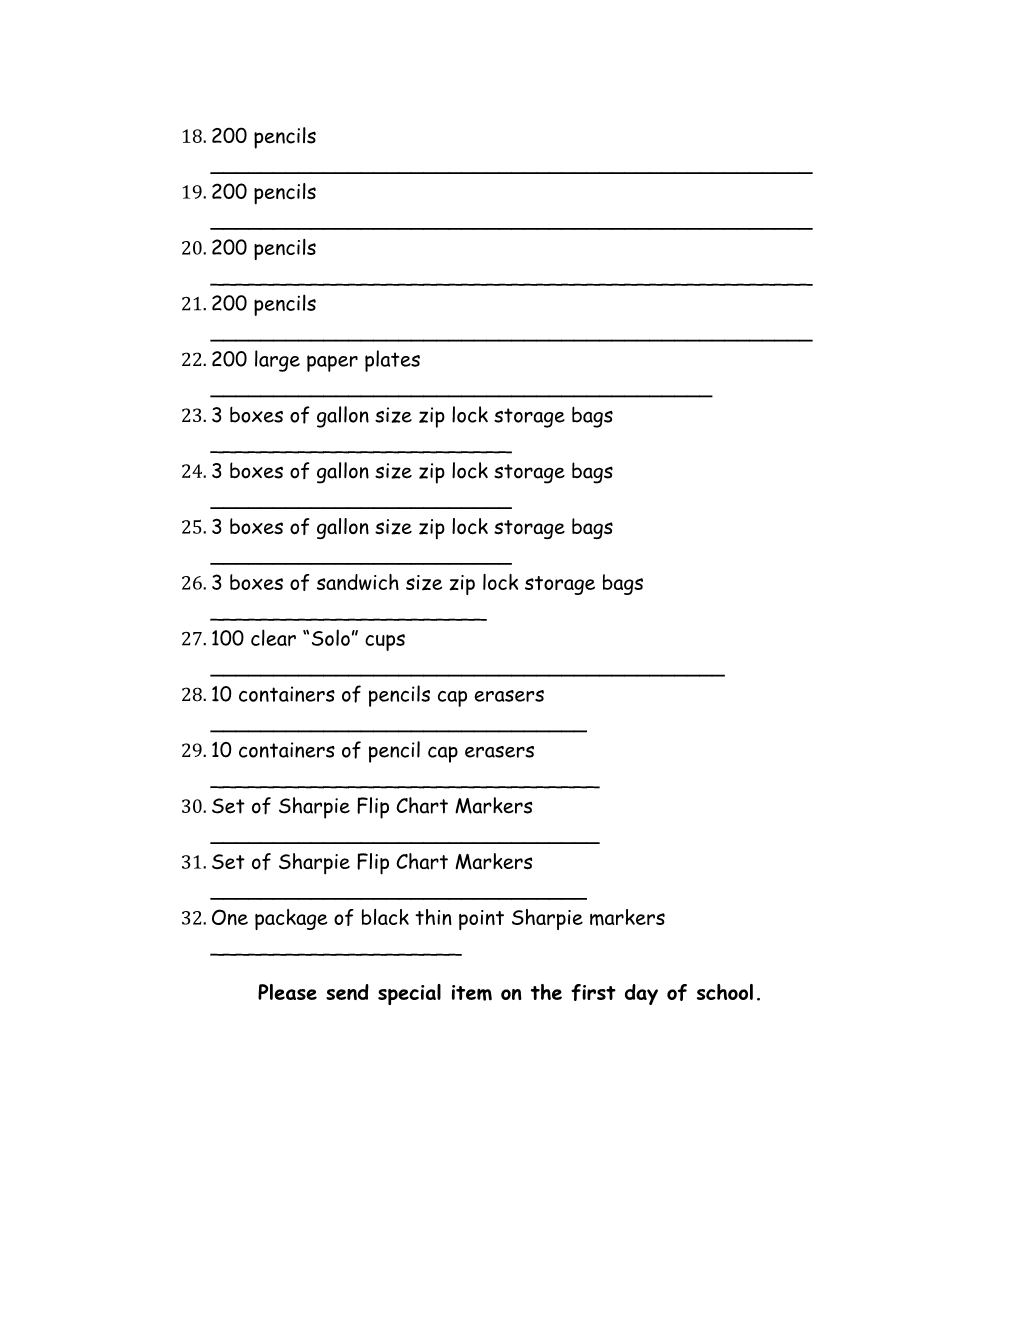 Third Grade Supply List s1